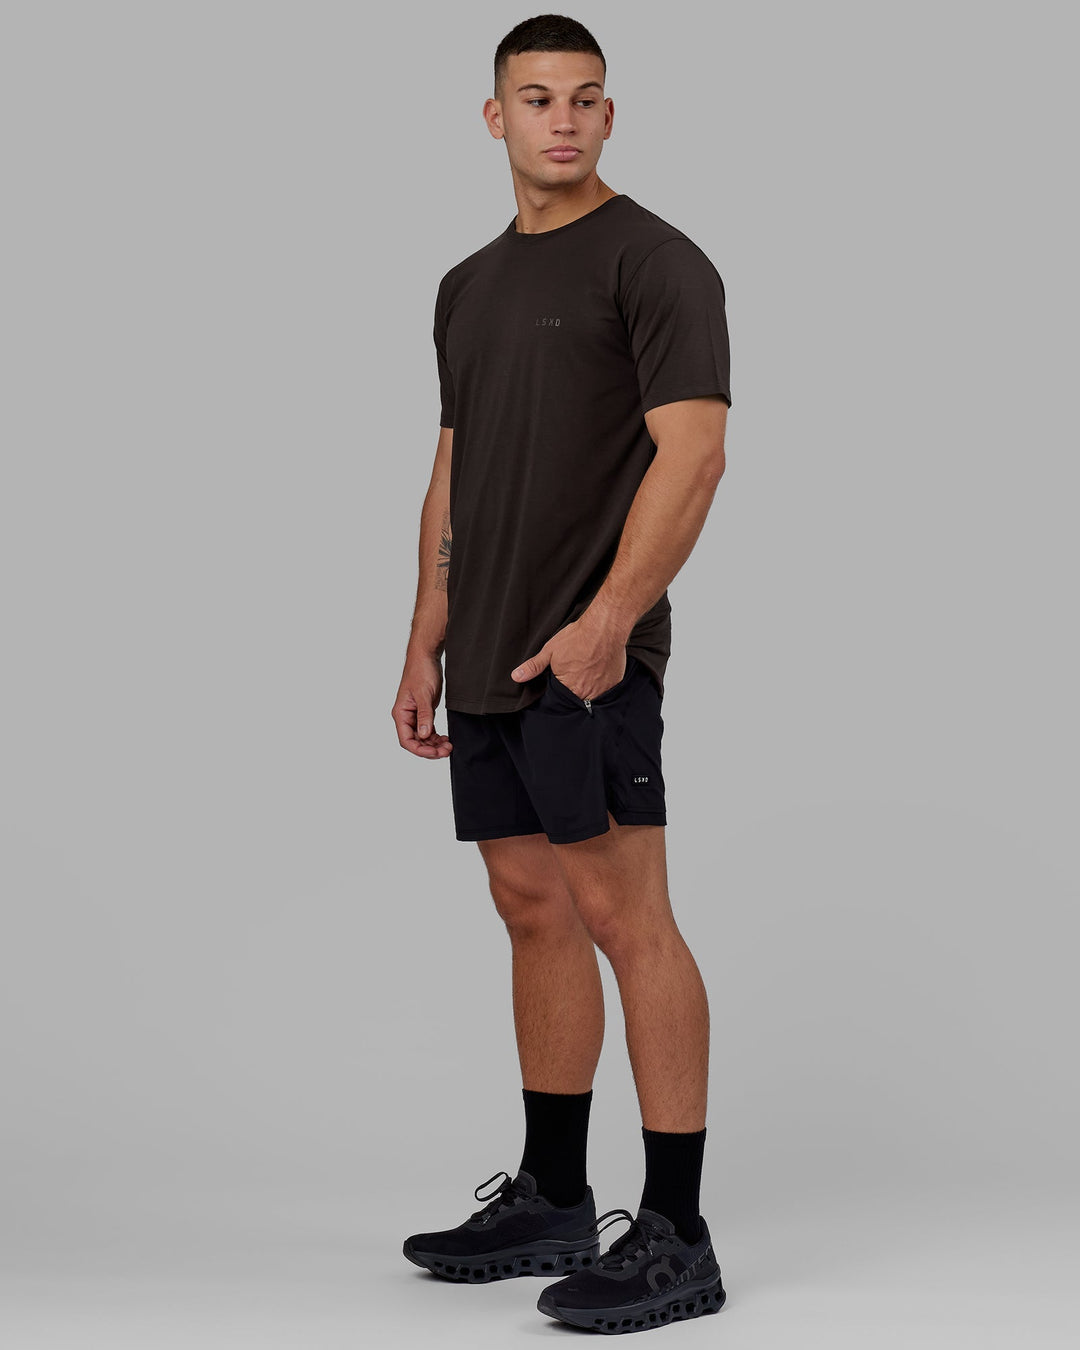 Man wearing Challenger 6" Performance Short - Black